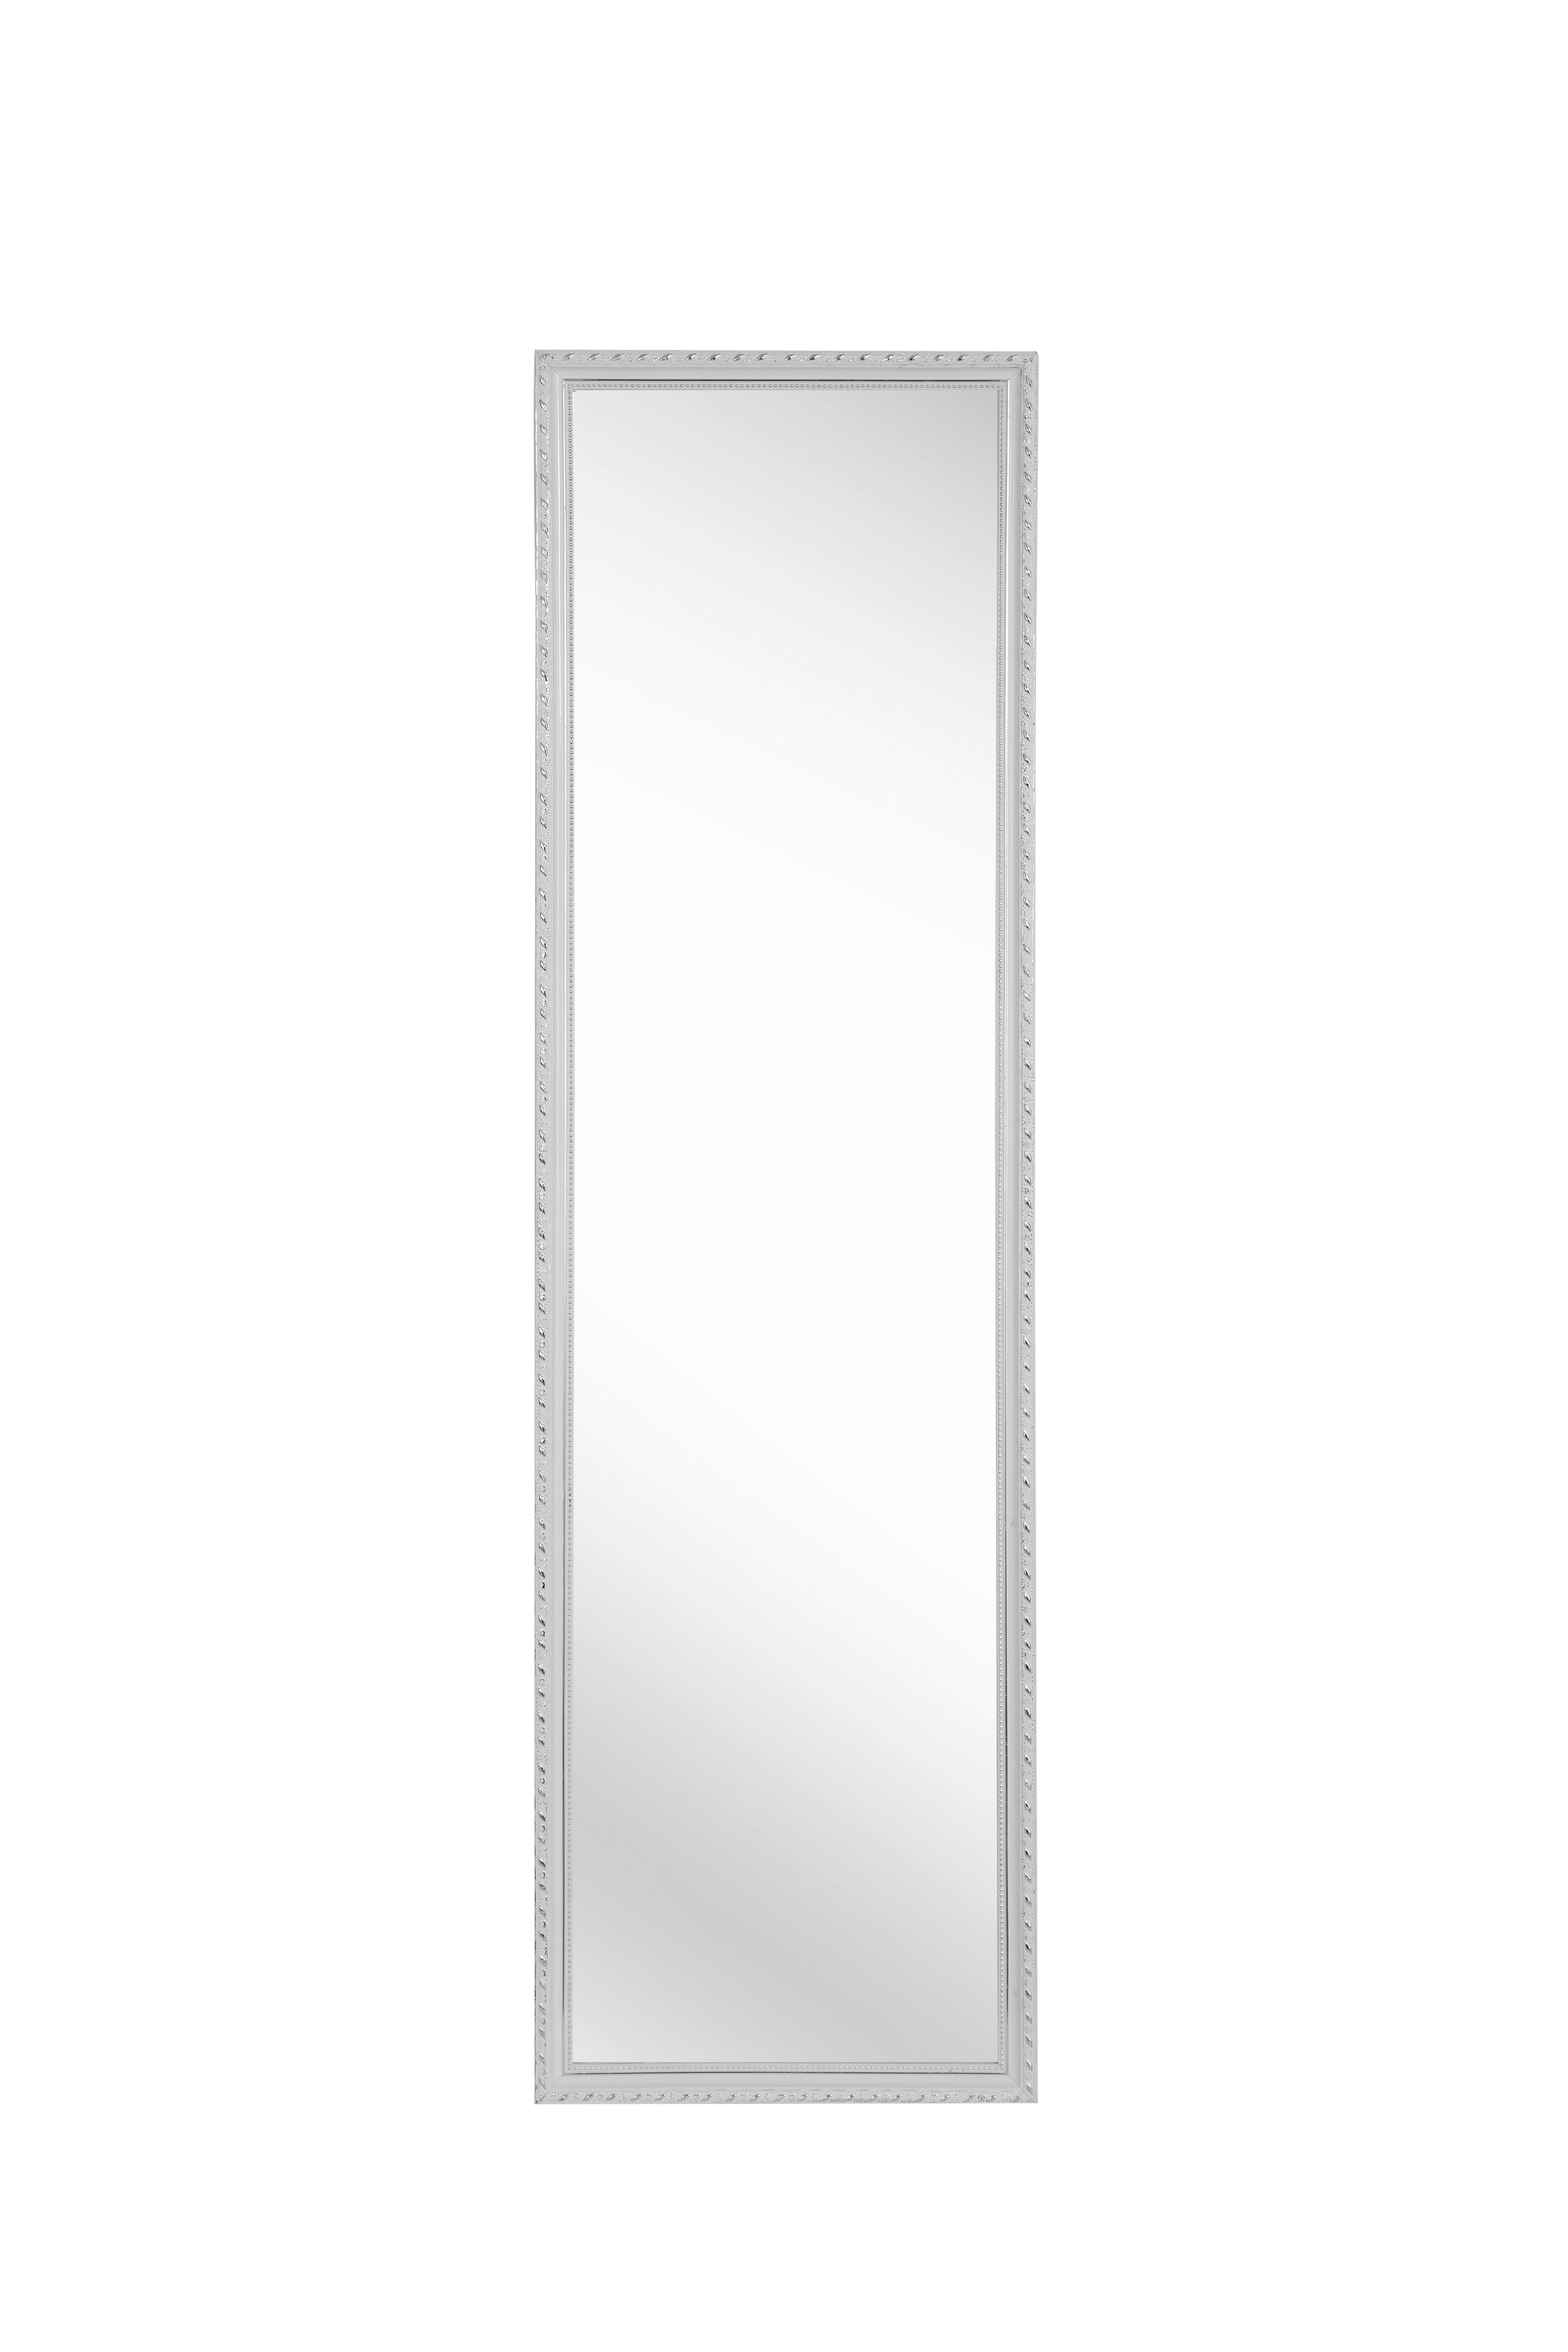 WANDSPIEGEL Weiß  - Weiß, LIFESTYLE, Glas/Holz (35/125/2cm) - Carryhome